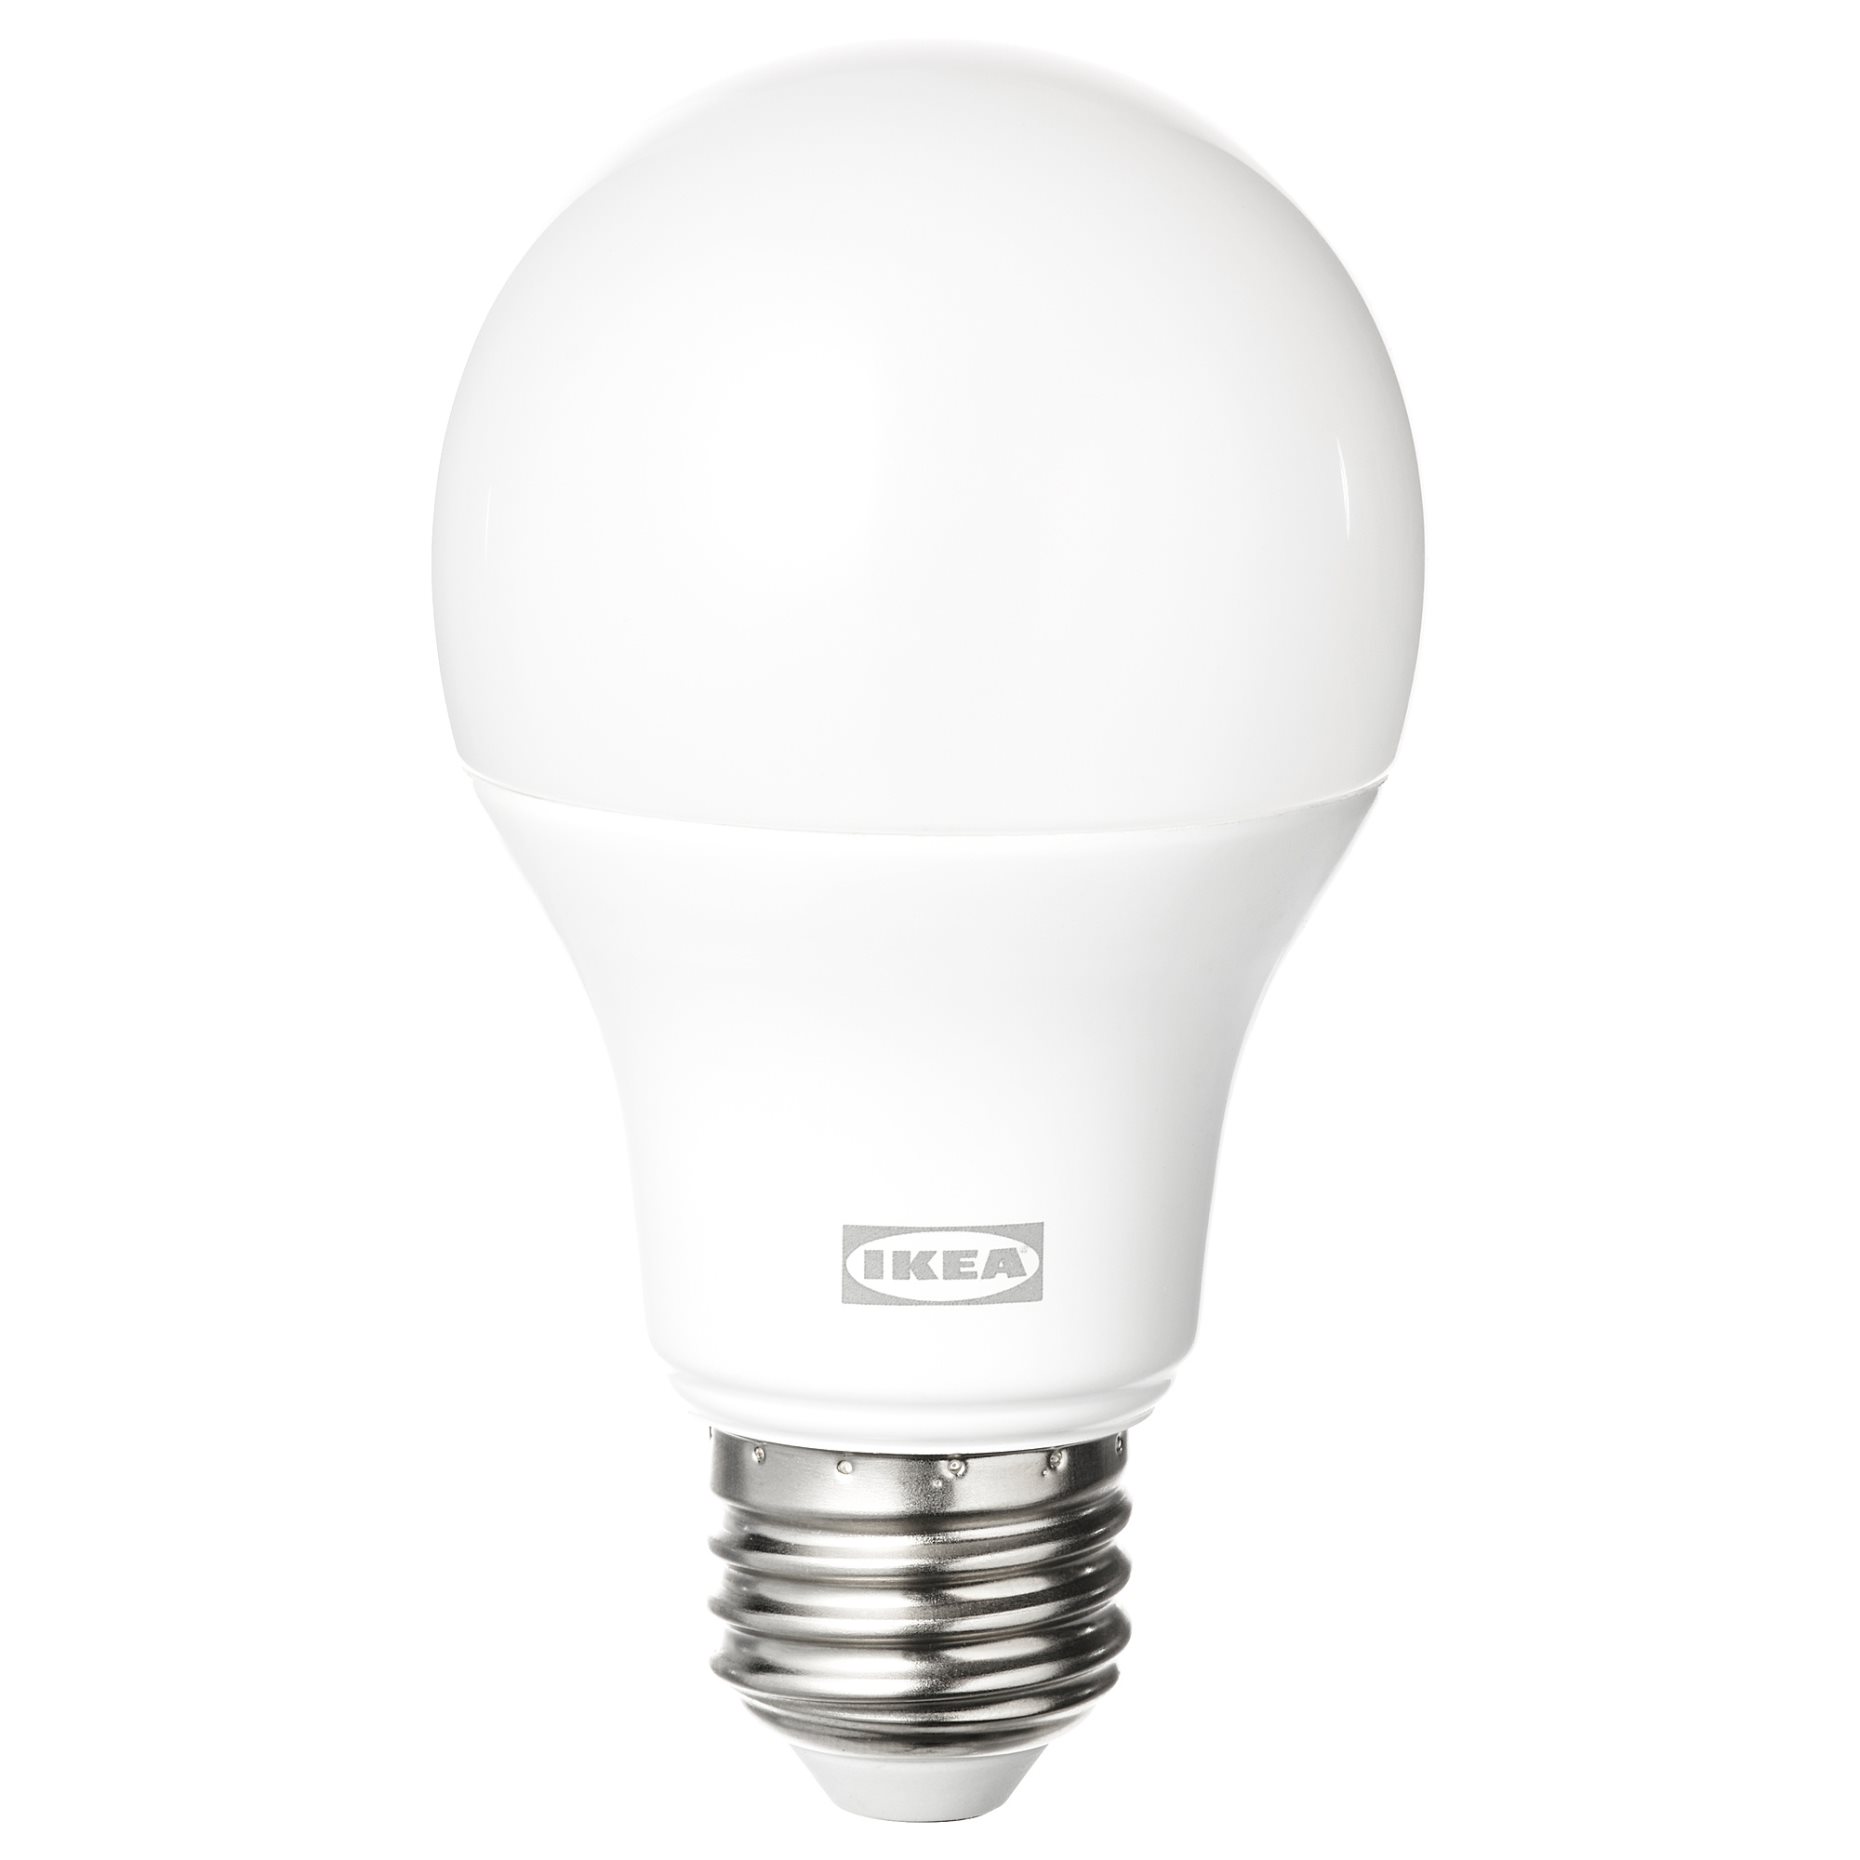 TRÅDFRI, LED bulb E27 806 lumen/wireless dimmable colour and white spectrum/globe, 305.474.71